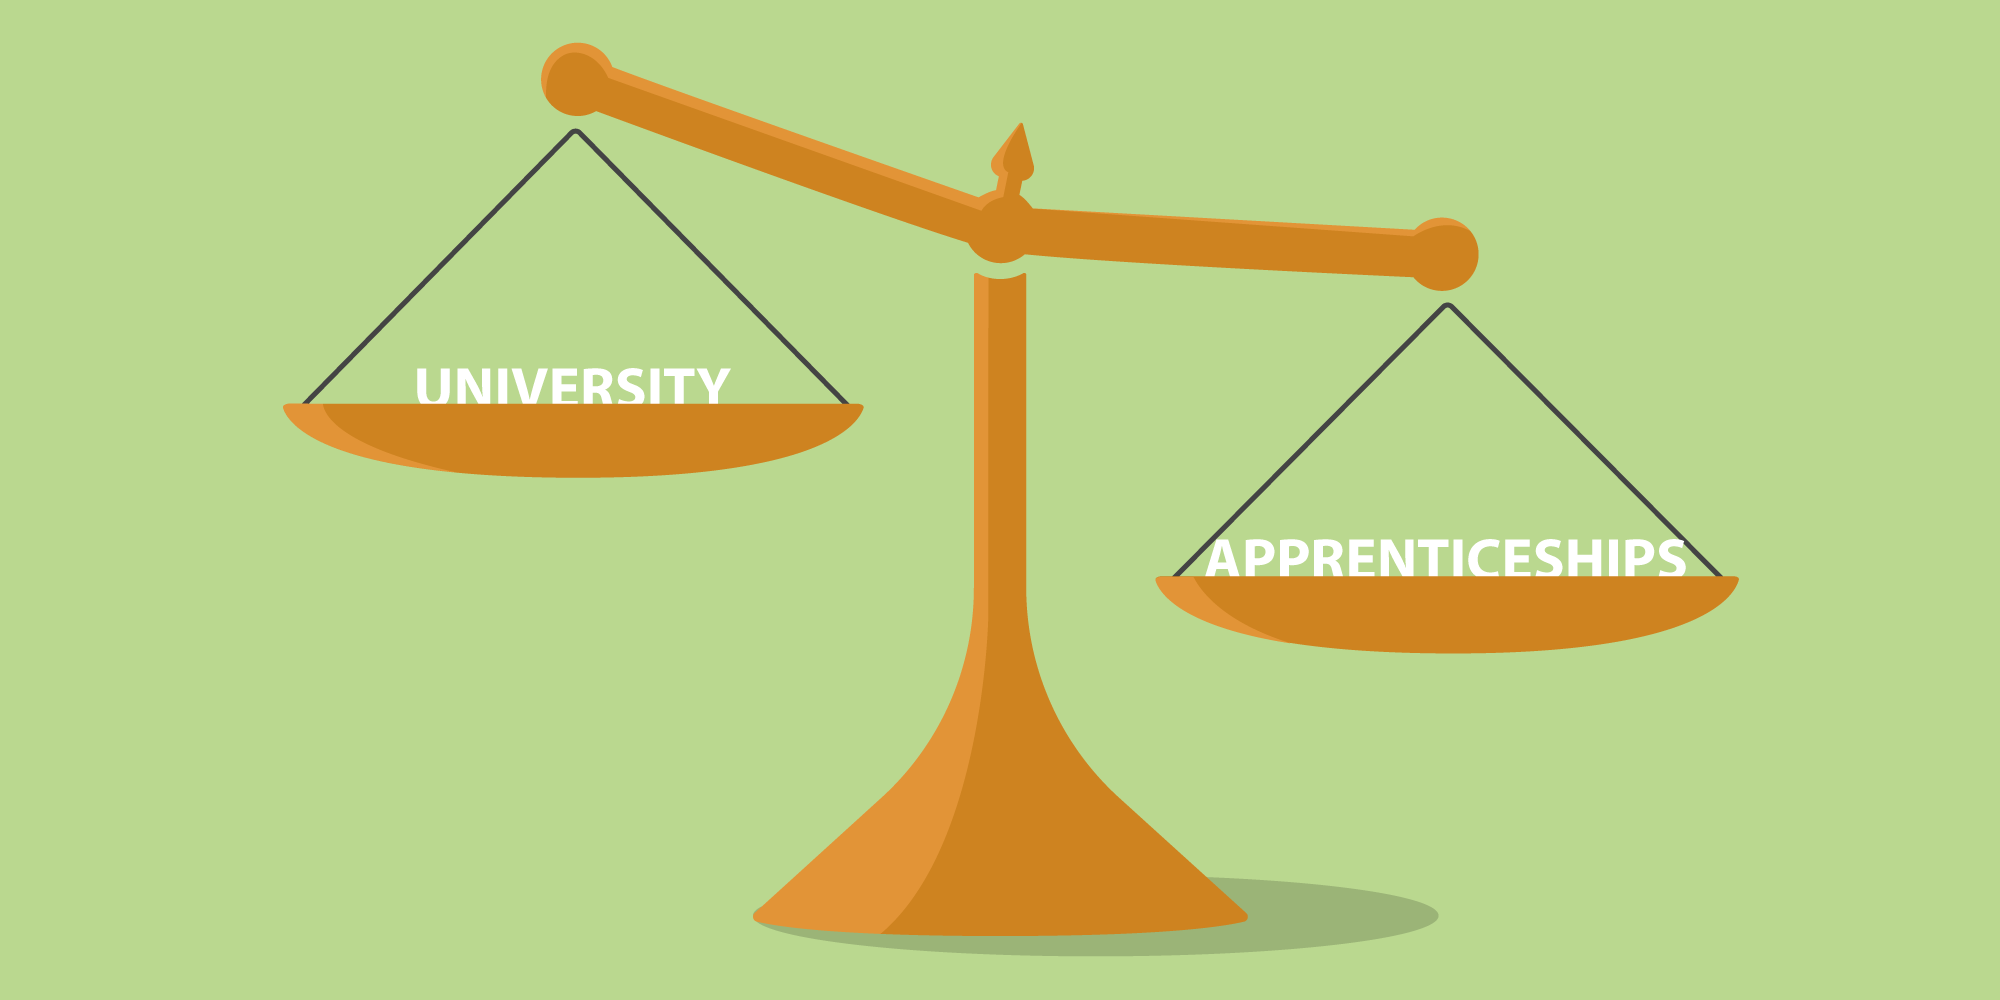 Apprenticeships vs University